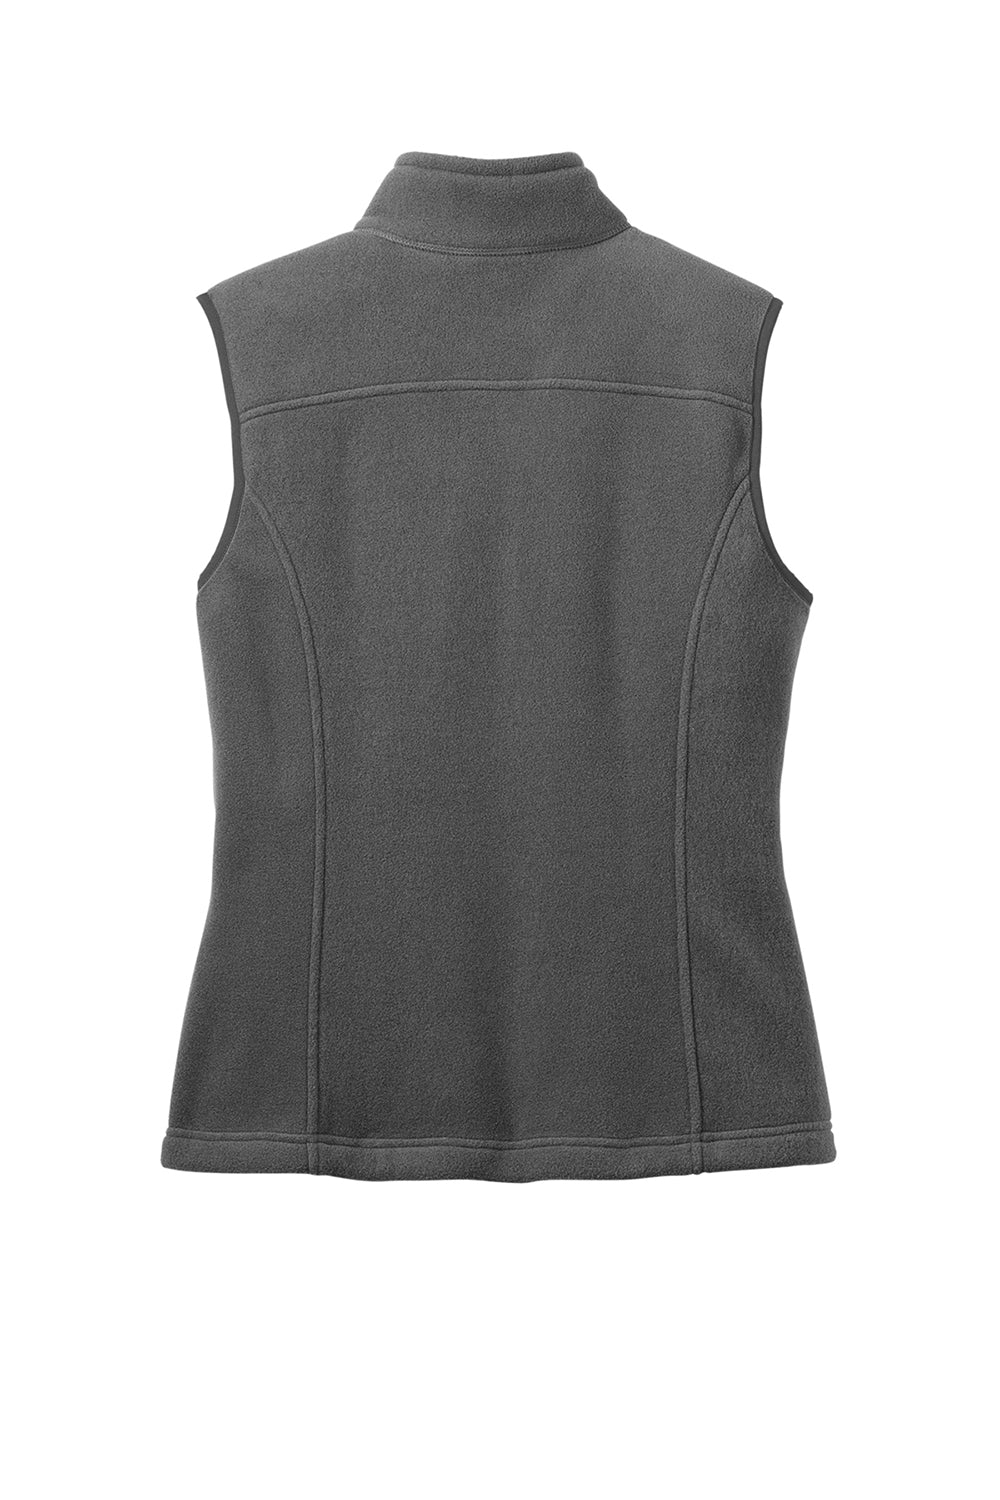 Eddie Bauer EB205 Womens Full Zip Fleece Vest Steel Grey Flat Back